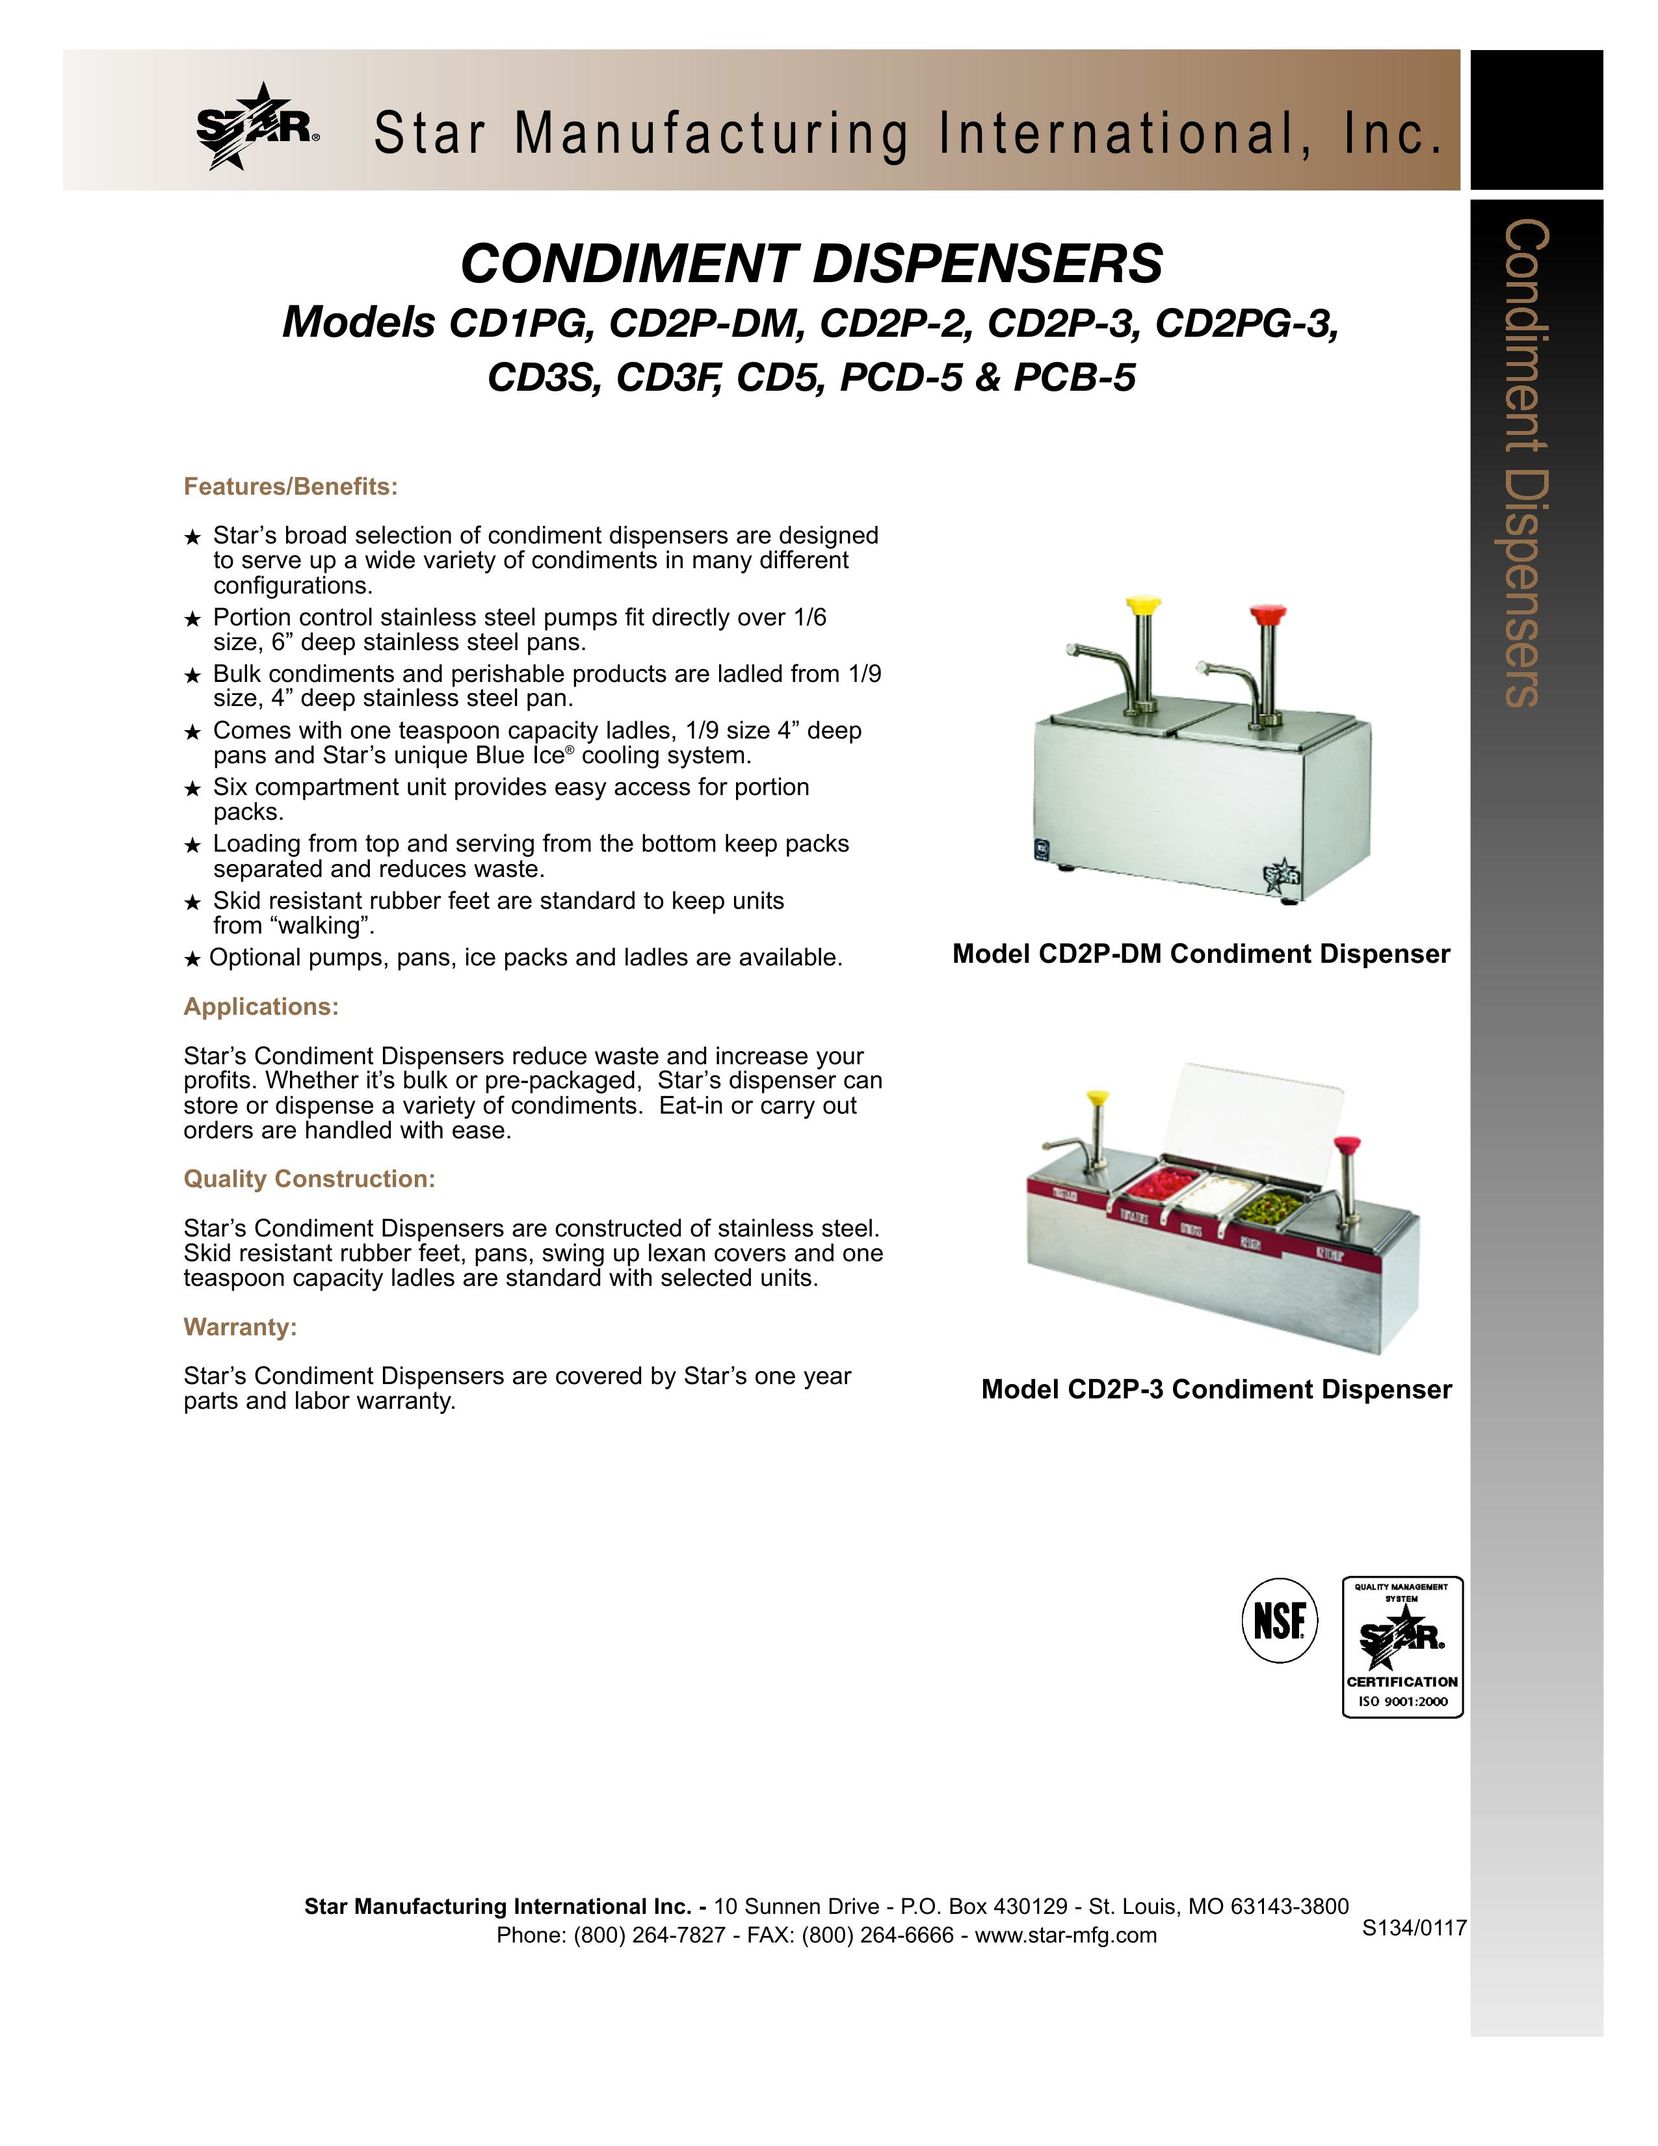 Star Manufacturing CD2P-3 Beverage Dispenser User Manual